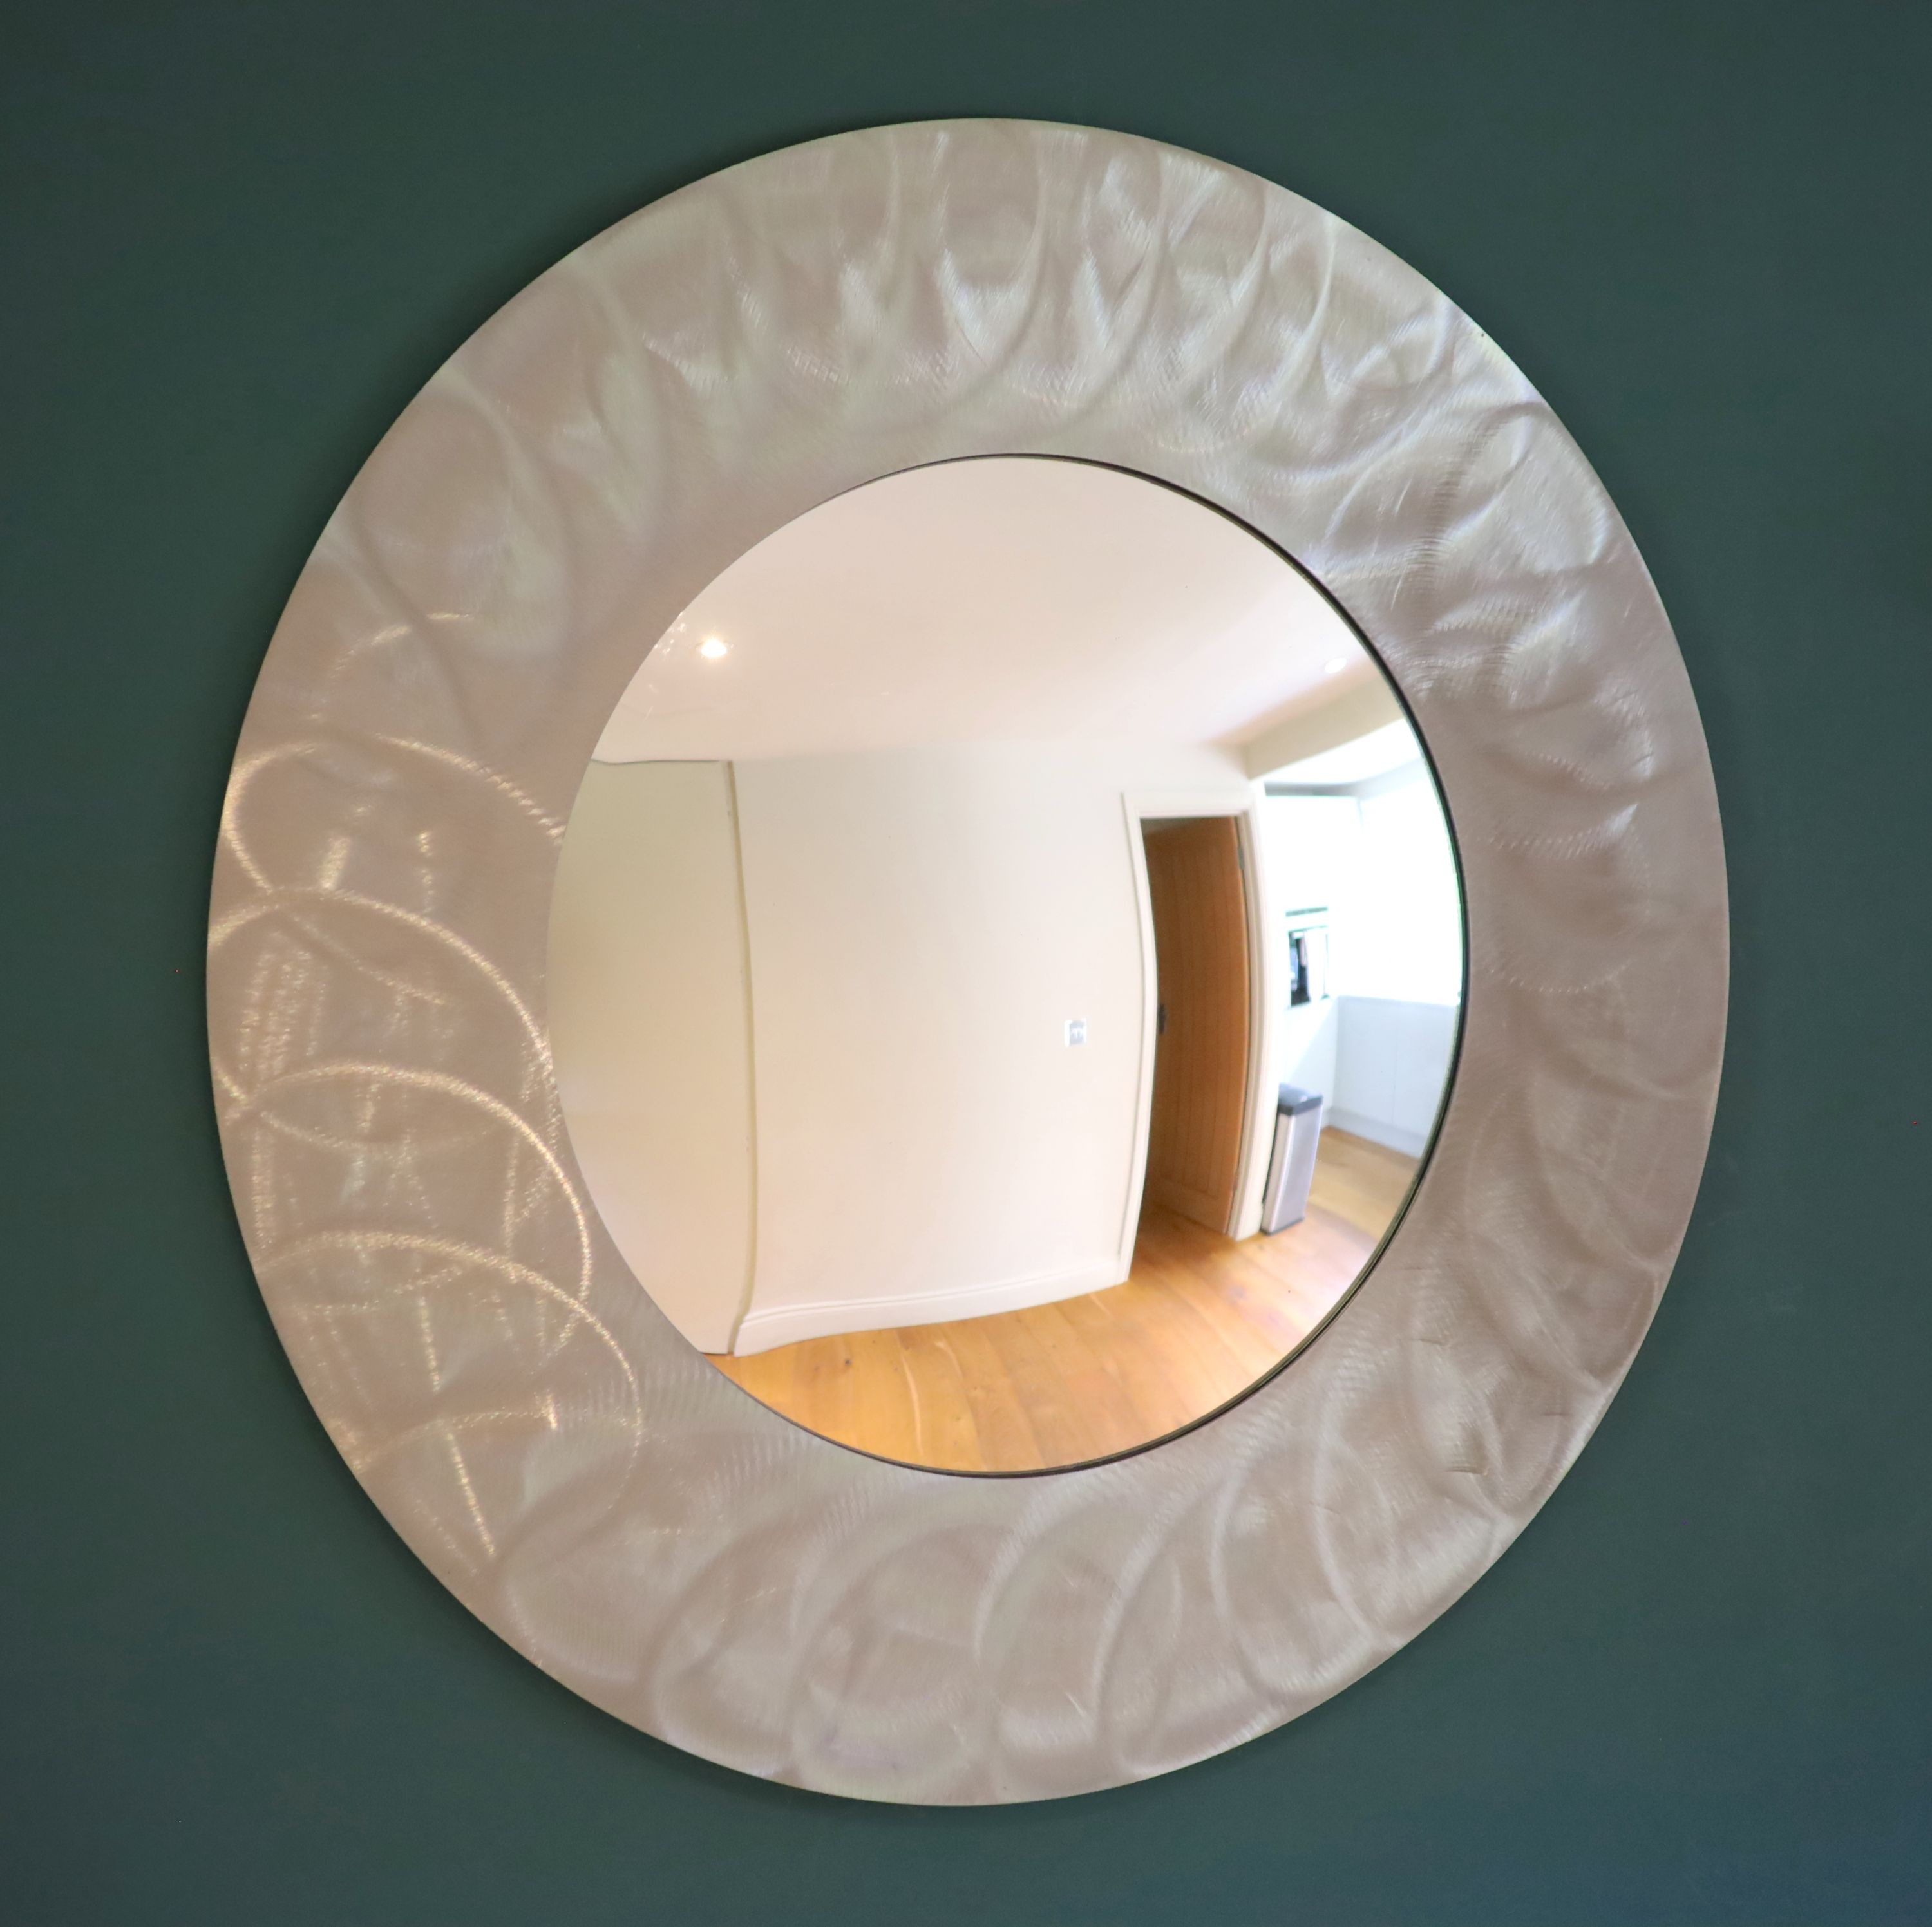 A brushed steel circular wall mirror, 96cm                                                                                                                                                                                  